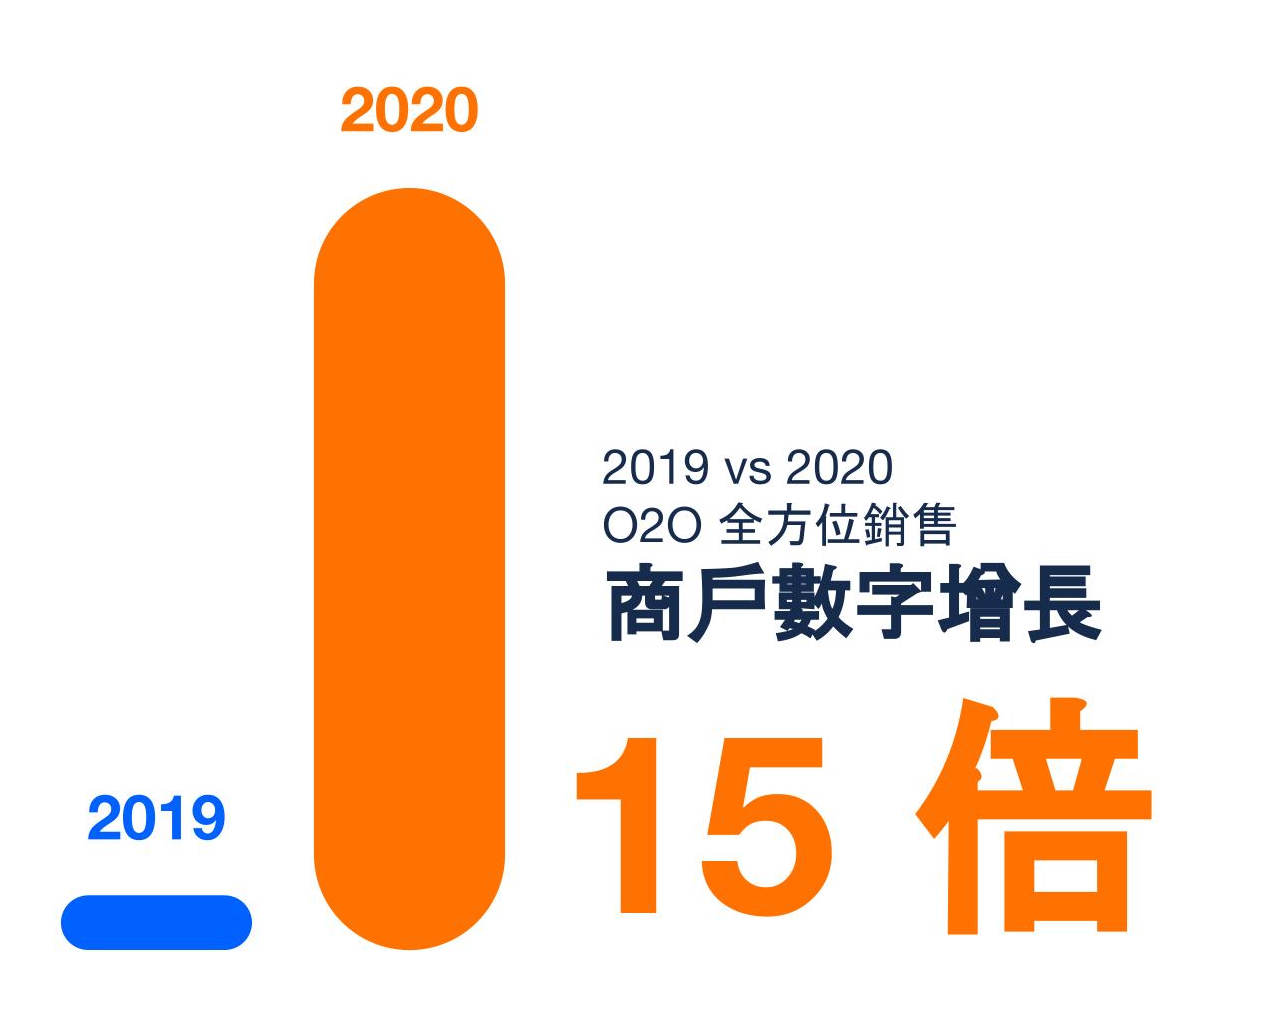 2019 vs 2020 merchants adopt O2O model 2020 年 O2O 全方位銷售商戶數字增長